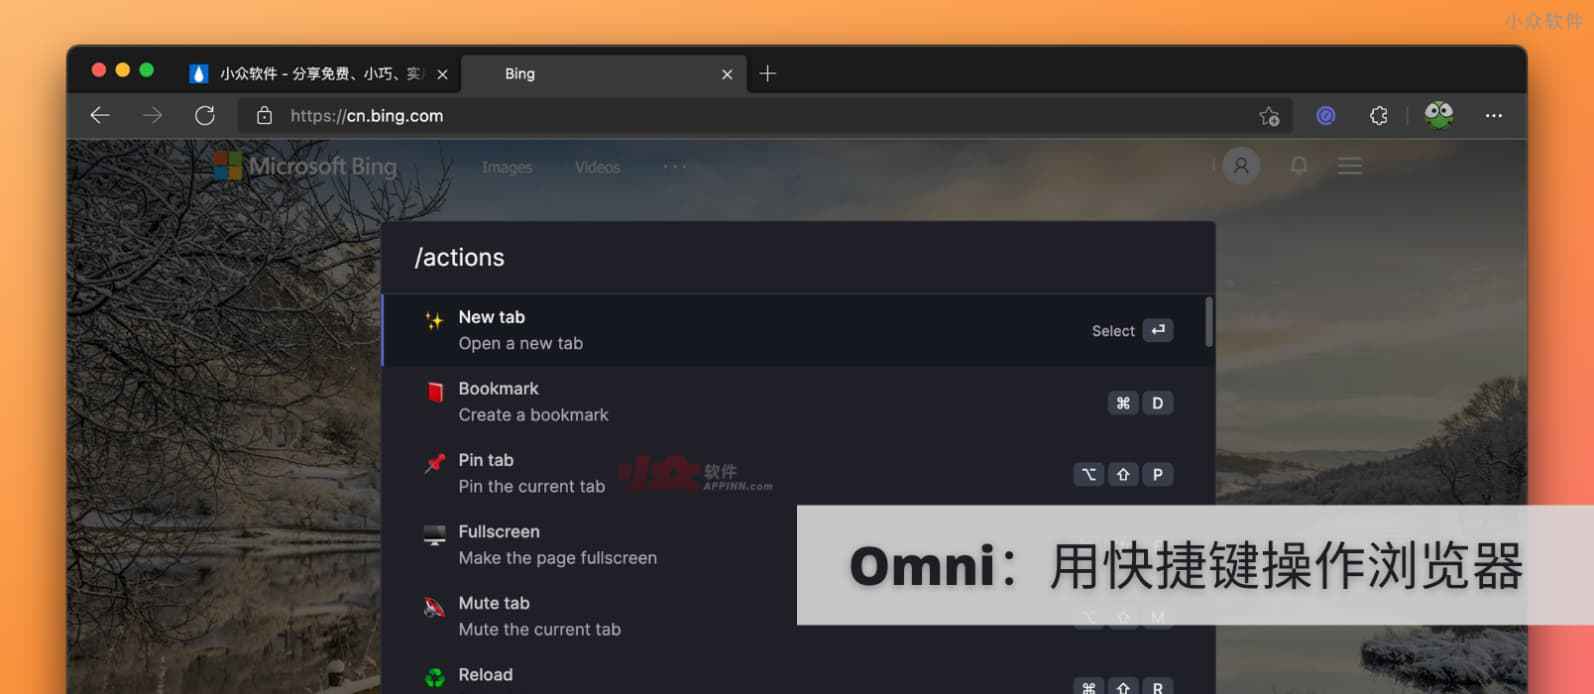 Omni – 50+ 功能，用快捷键操作浏览器：切换标签、书签、静音、录屏，整合 Notion、Figma 等服务